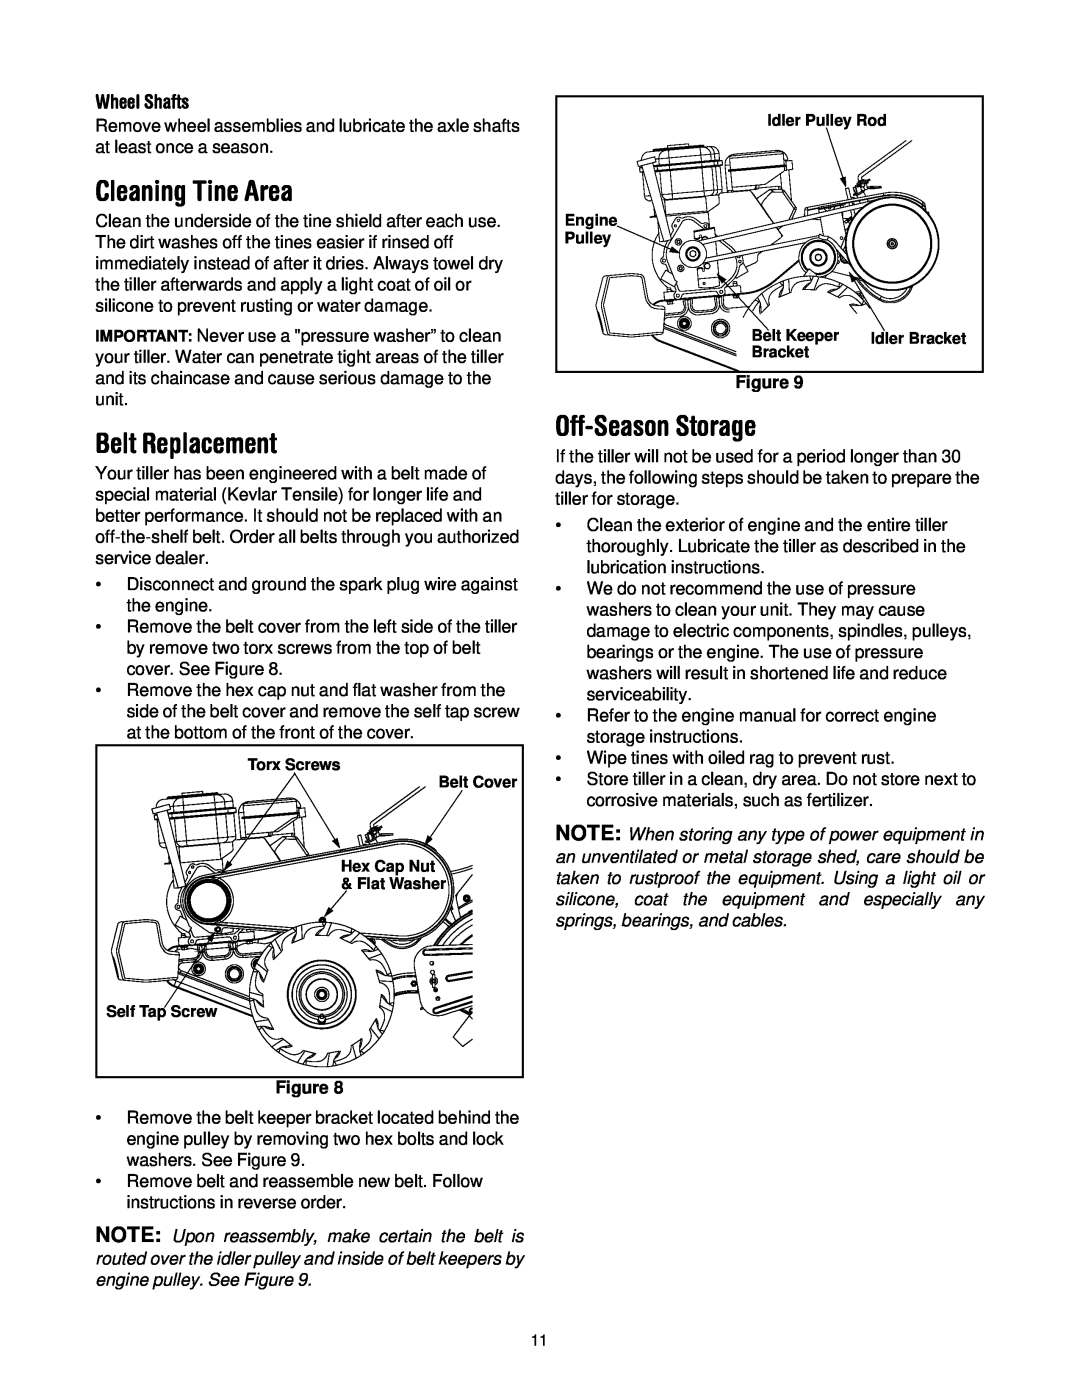 Ryobi 454 manual Cleaning Tine Area, Belt Replacement, Off-SeasonStorage, Wheel Shafts 